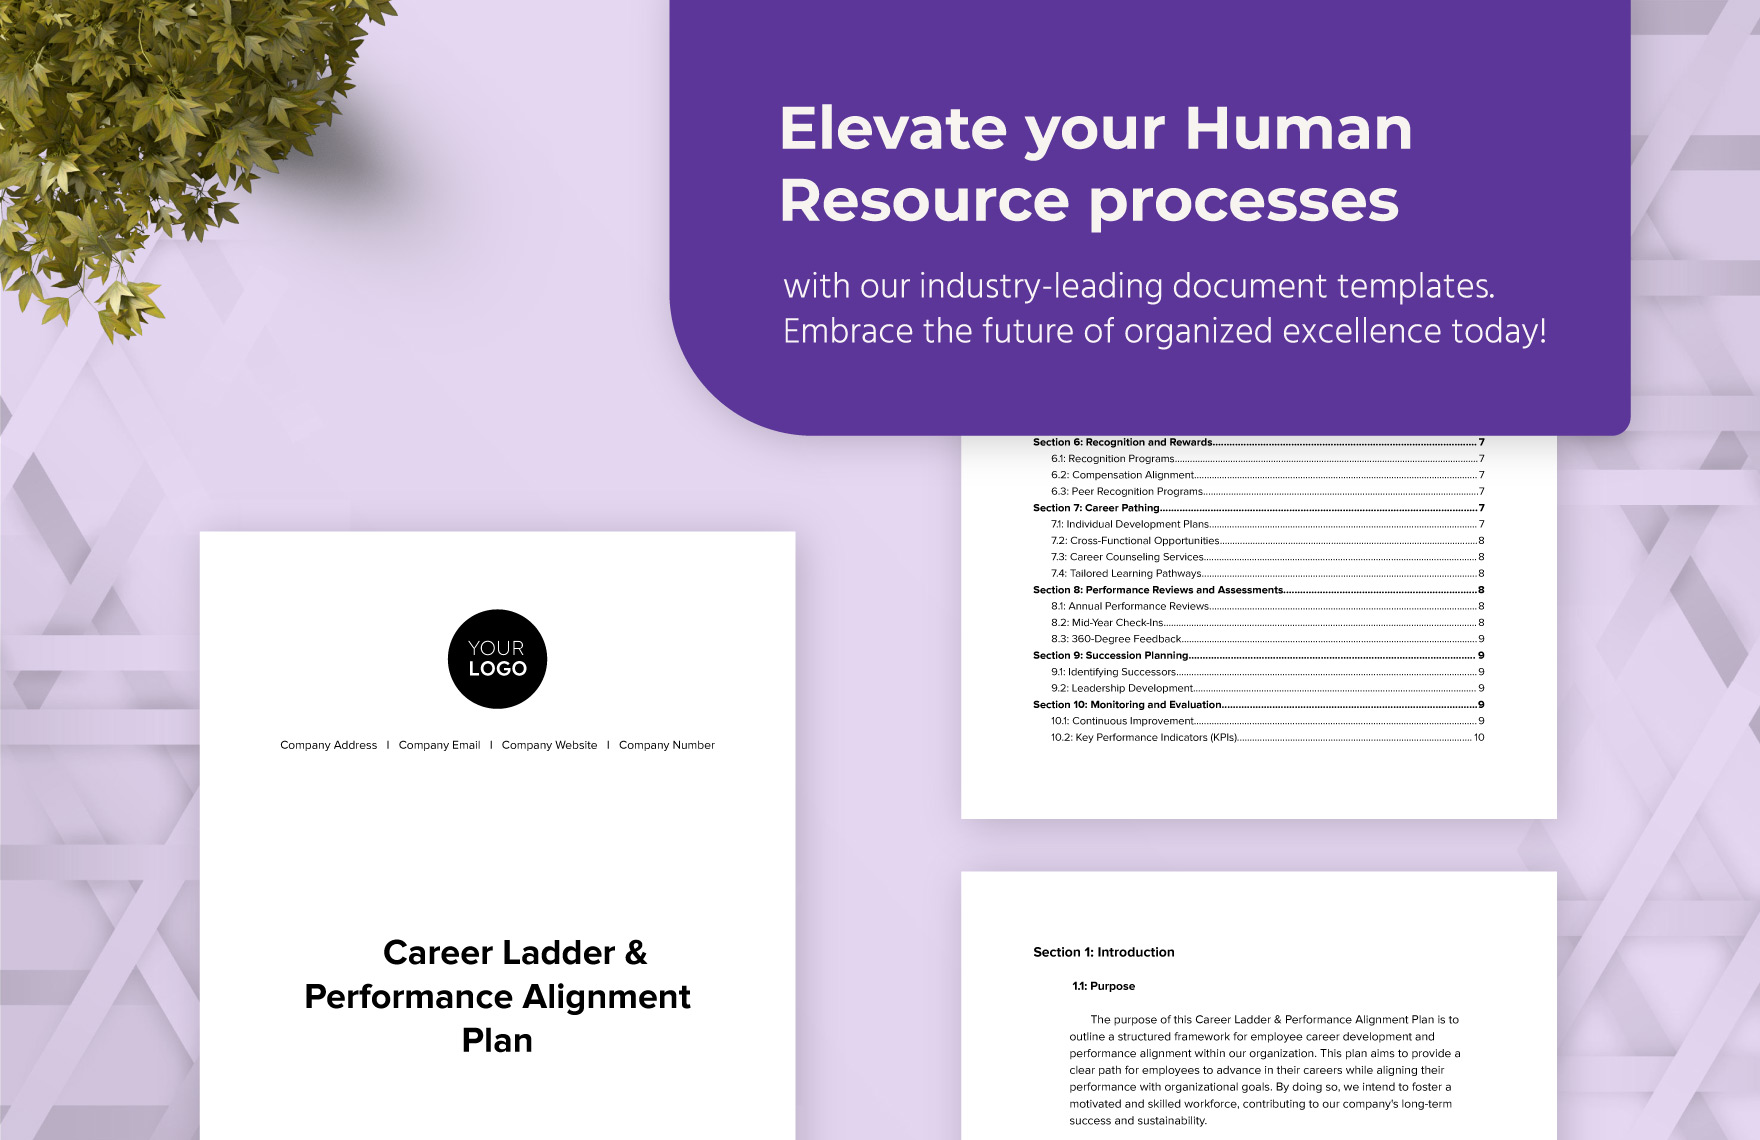 Career Ladder & Performance Alignment Plan HR Template